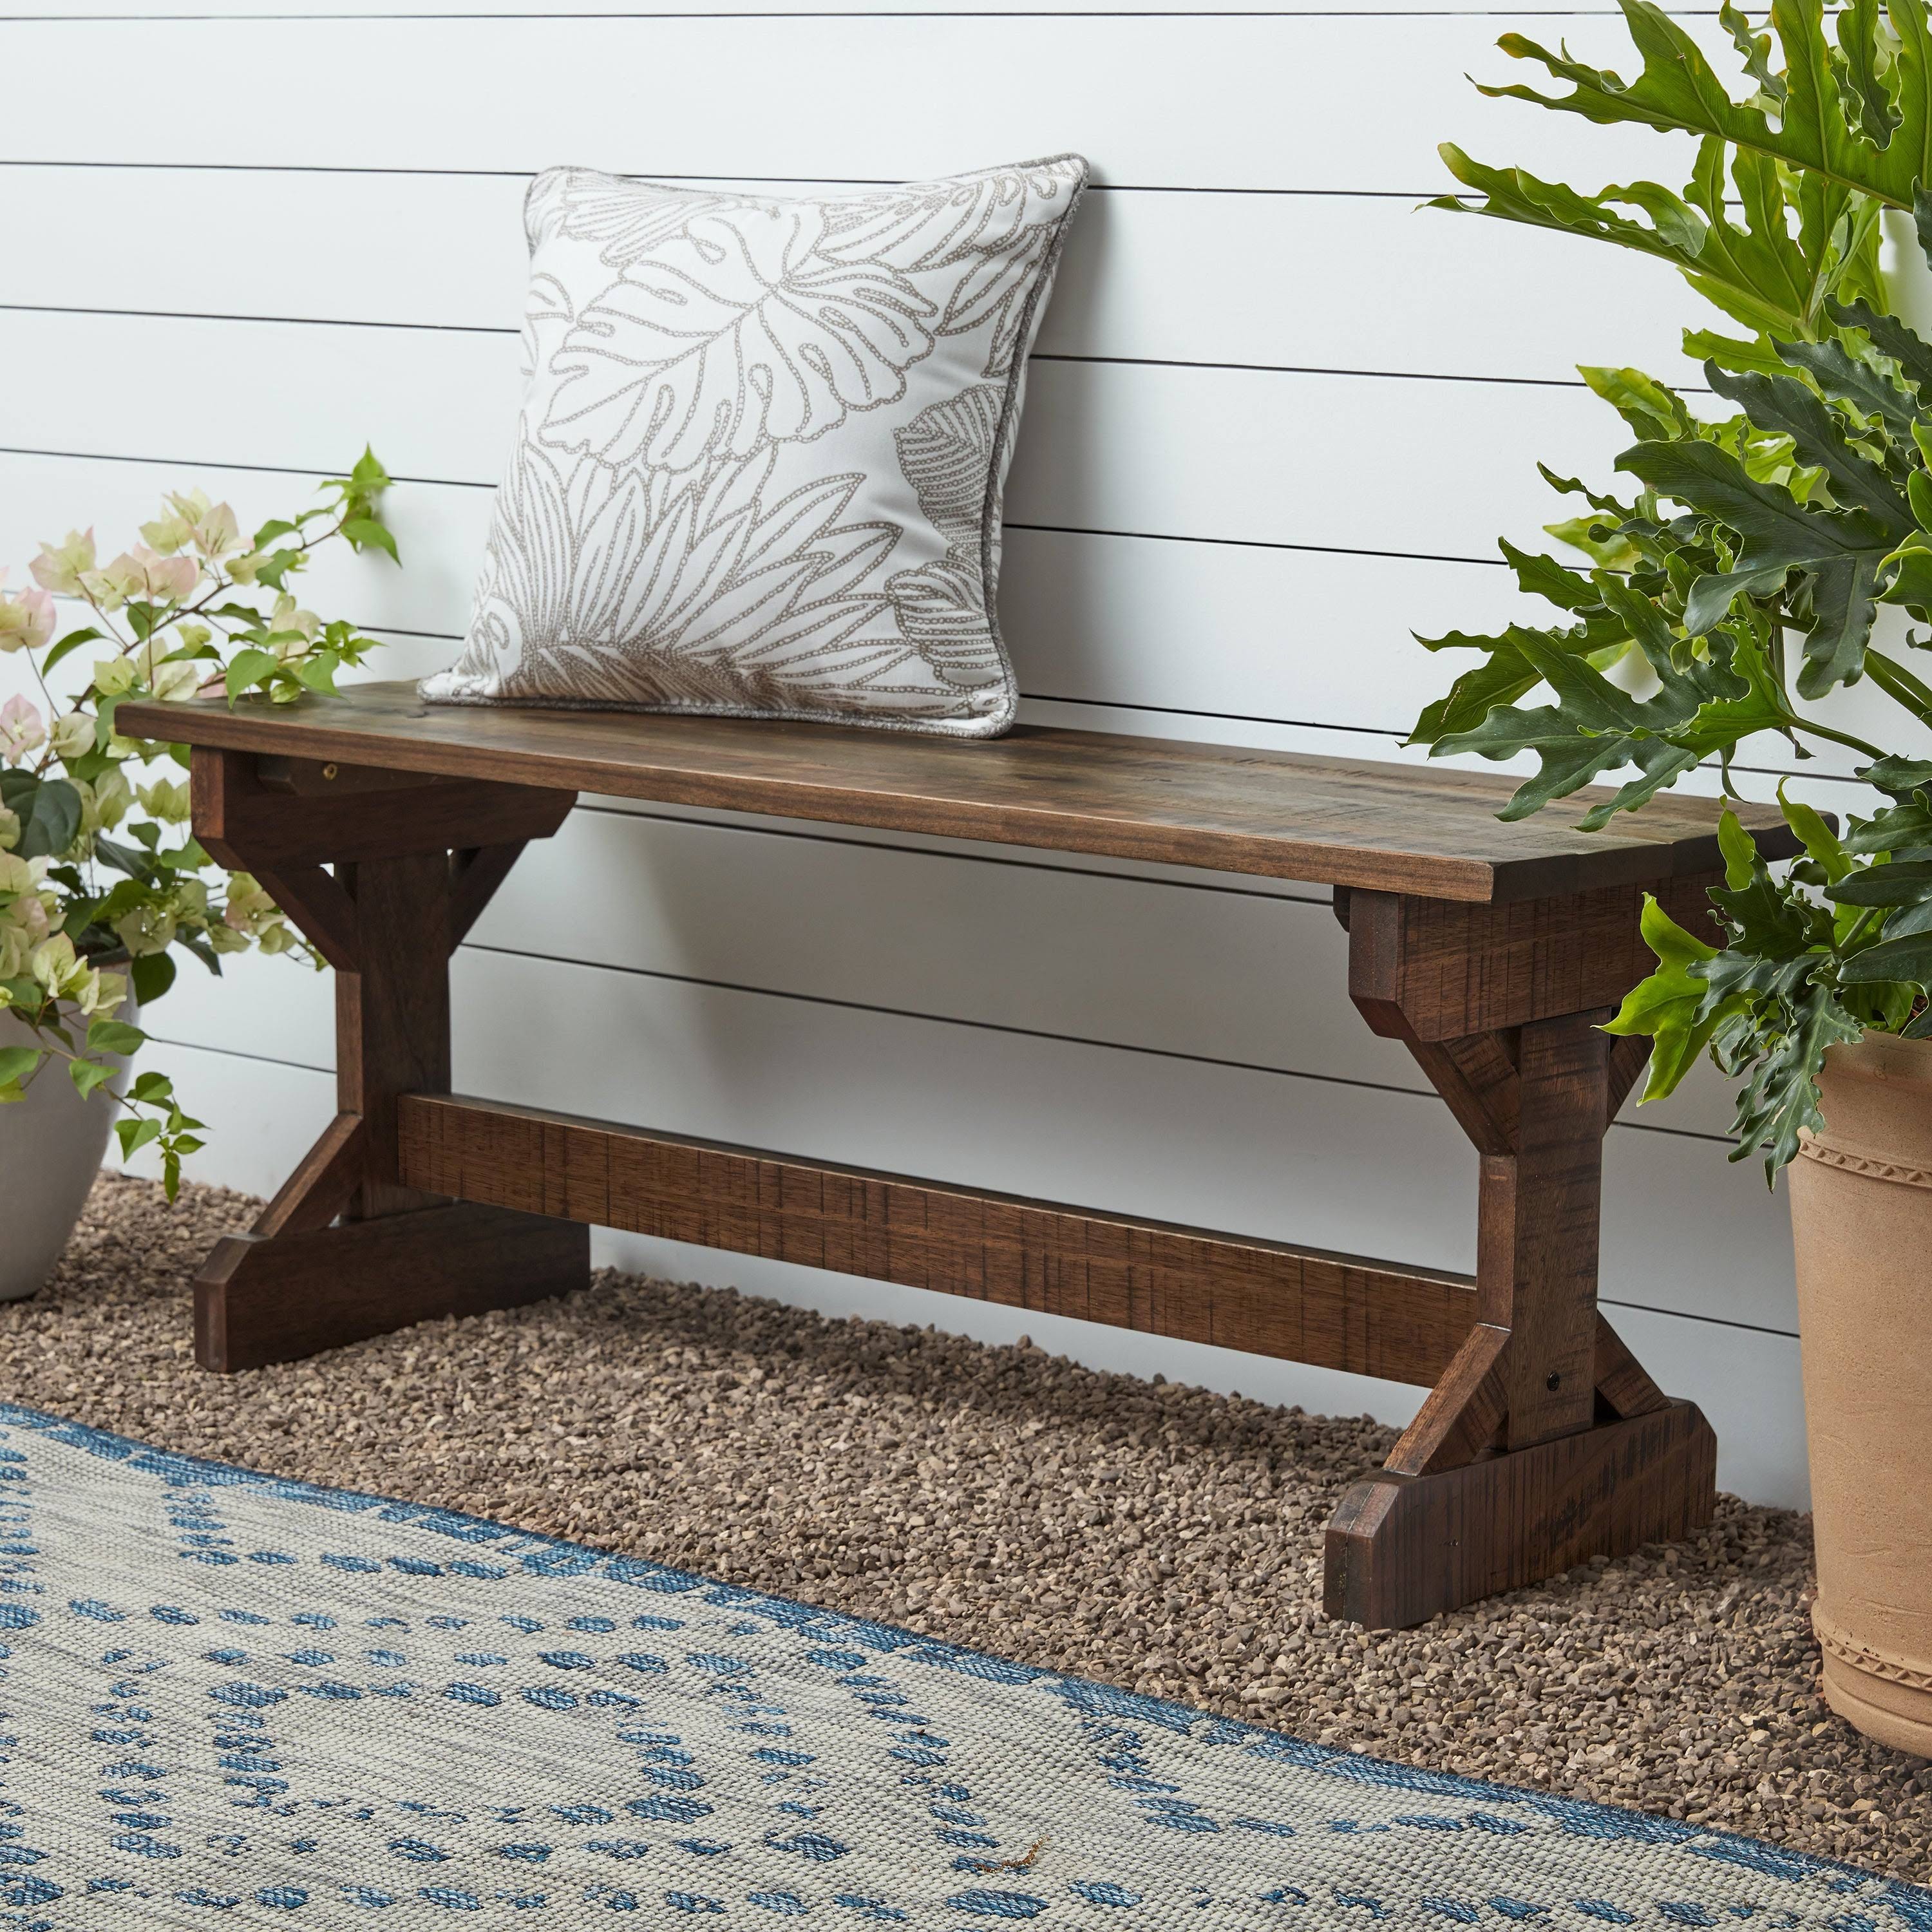 Stylish Farmhouse Meranti Hardwood Porch Bench with Indoor & Outdoor Use | Image